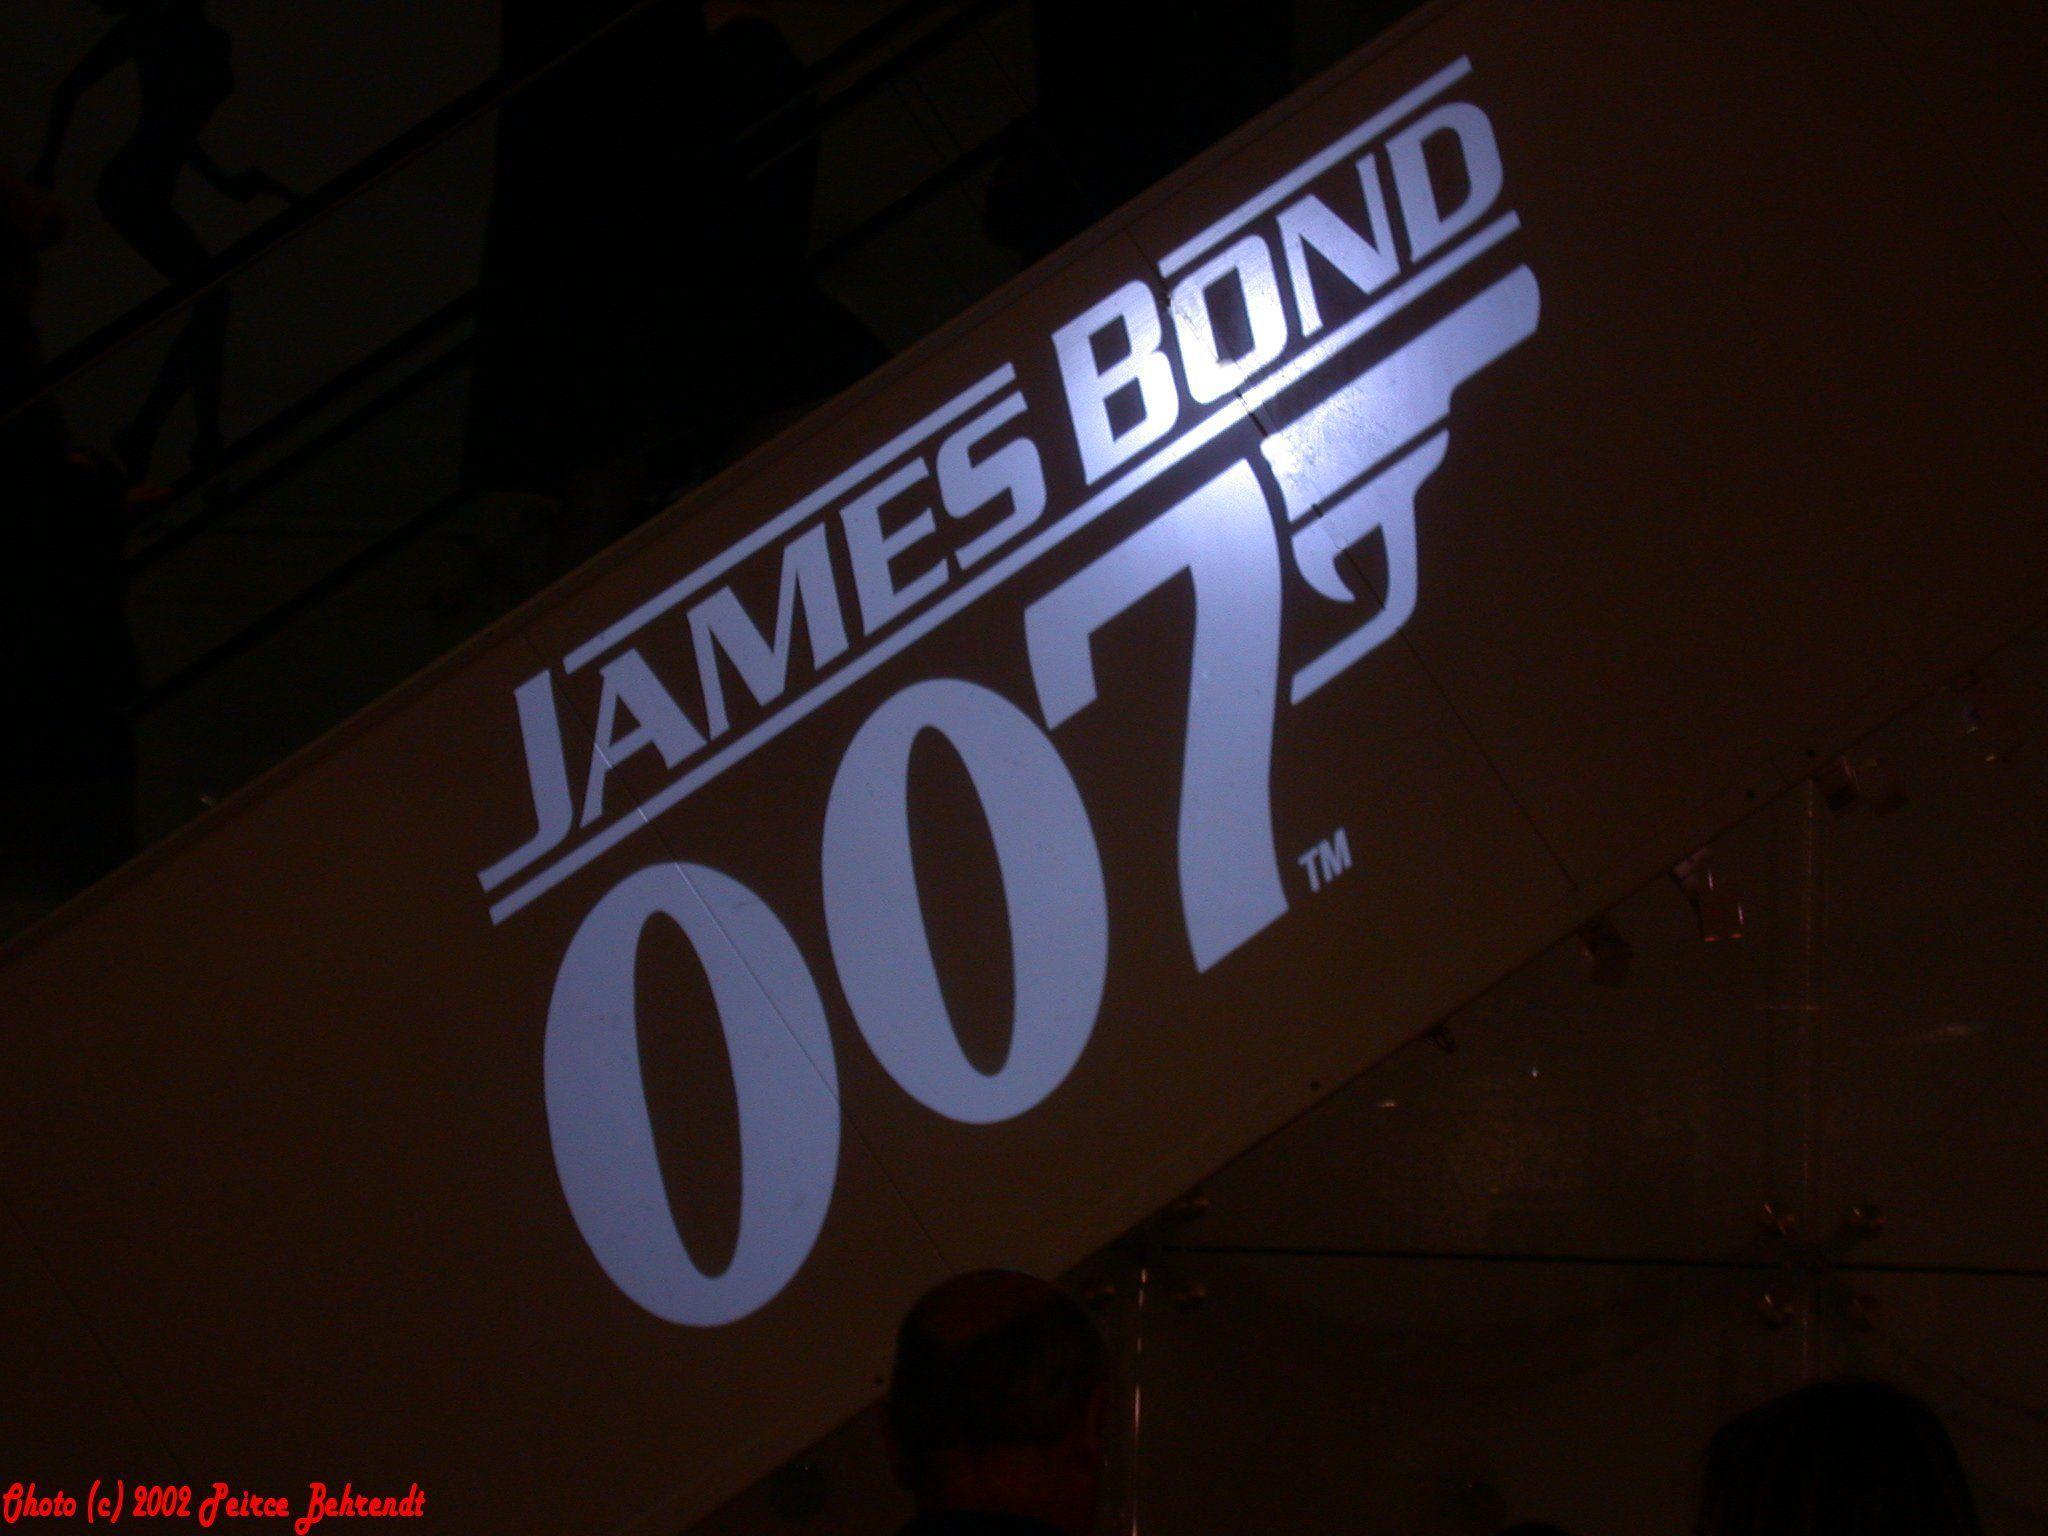 OO7 Logo - James Bond 007 Logo Wallpapers - Wallpaper Cave